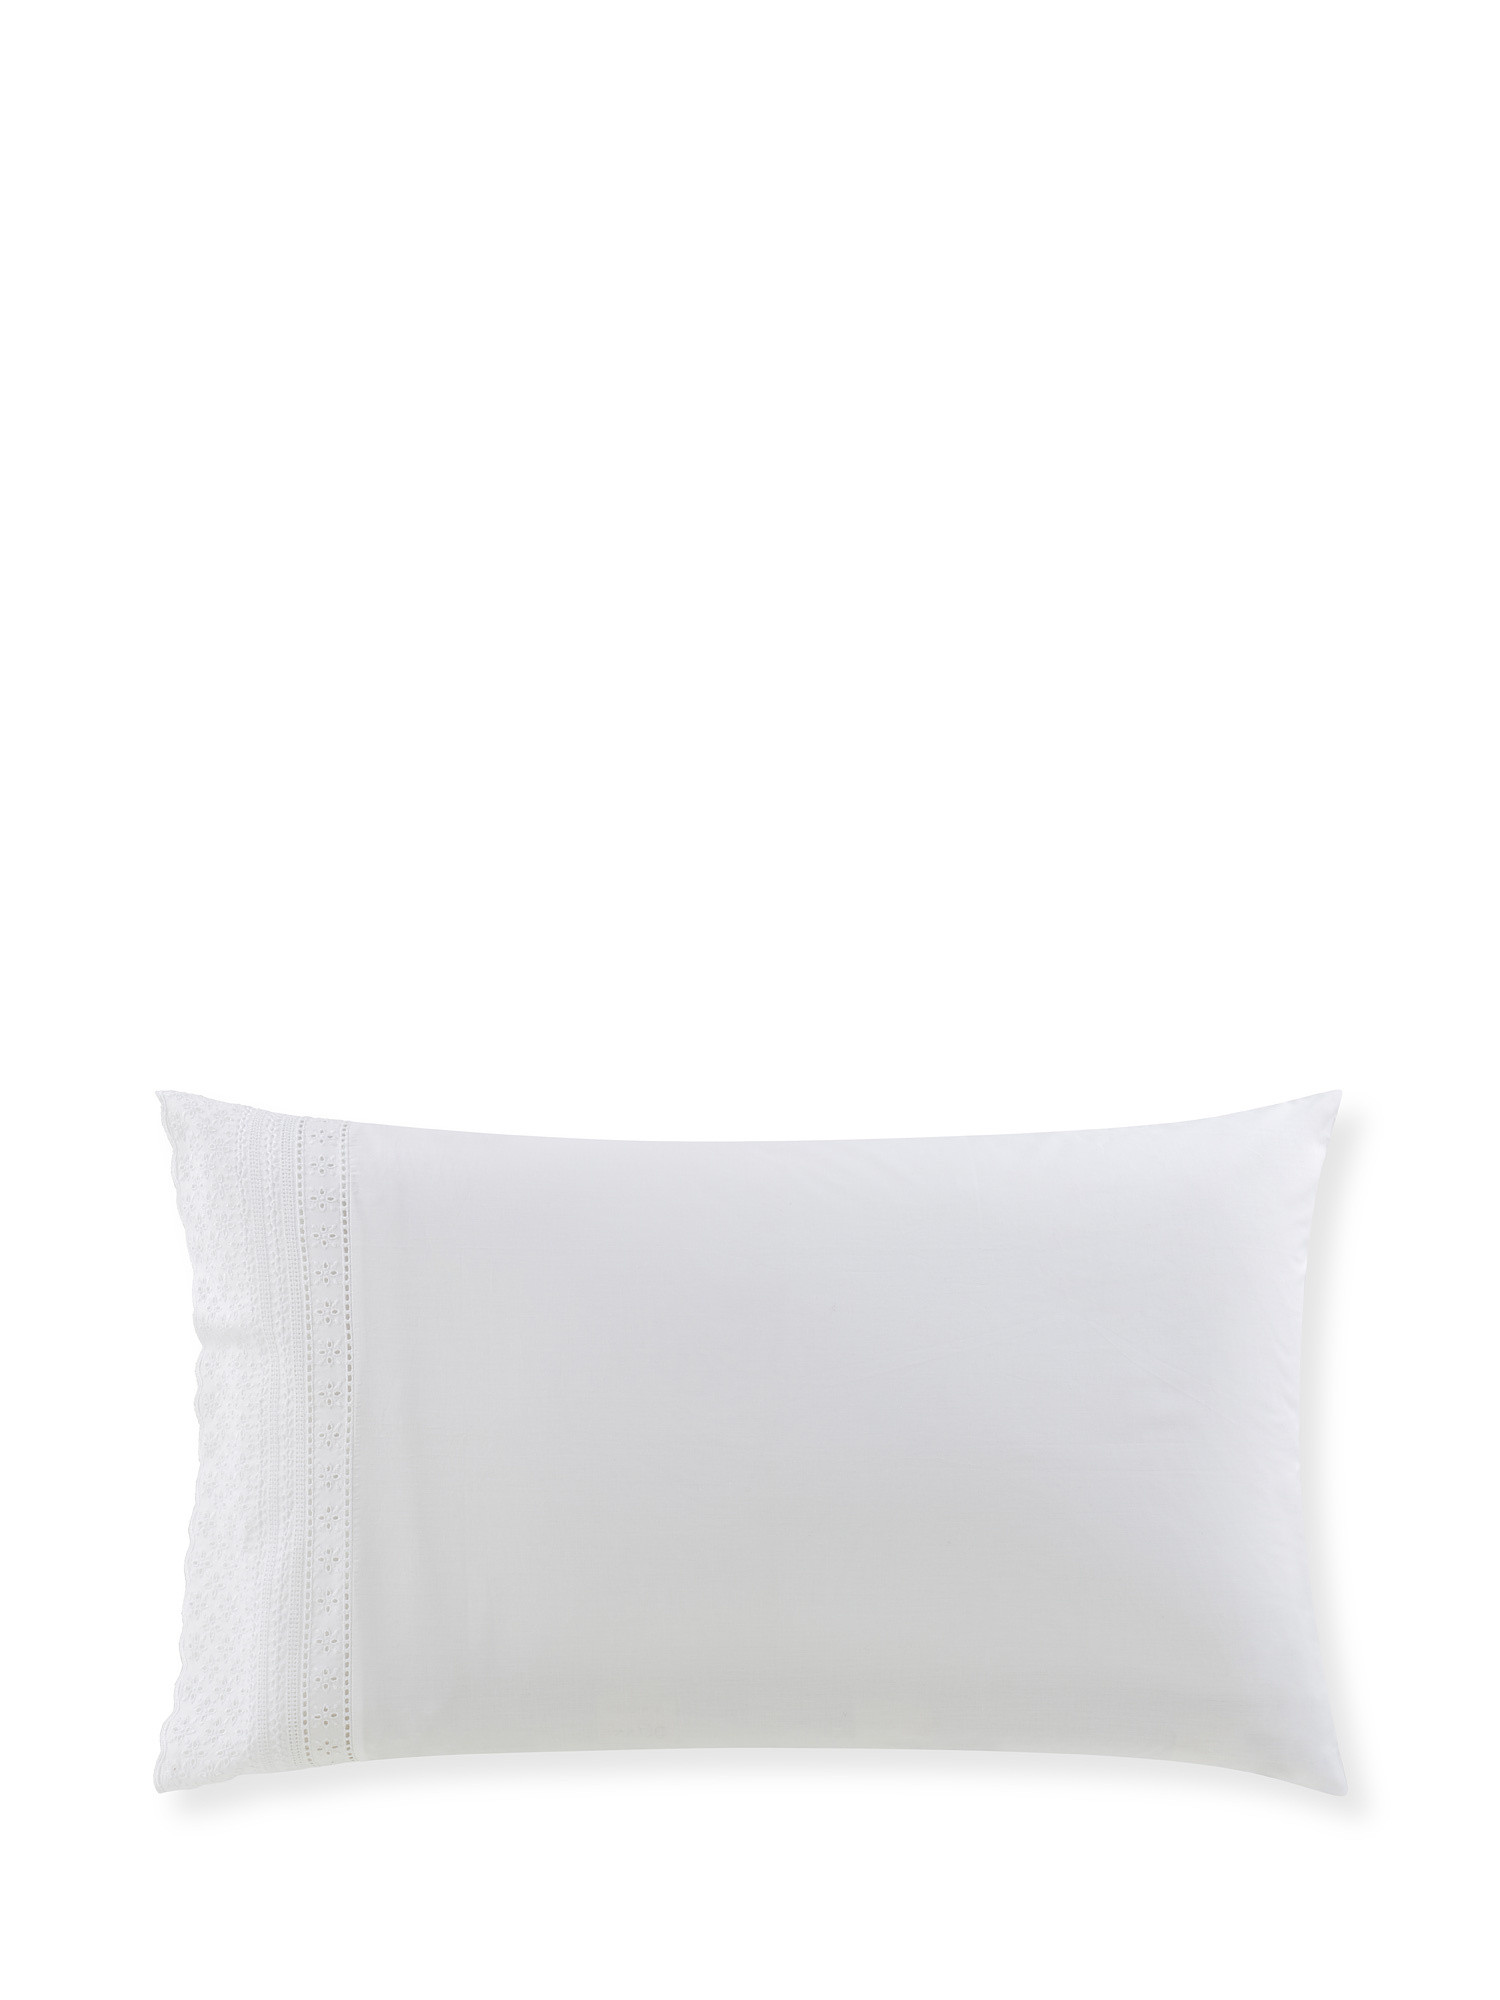 Portofino Sangallo lace pillowcase in 100% cotton percale, White, large image number 0